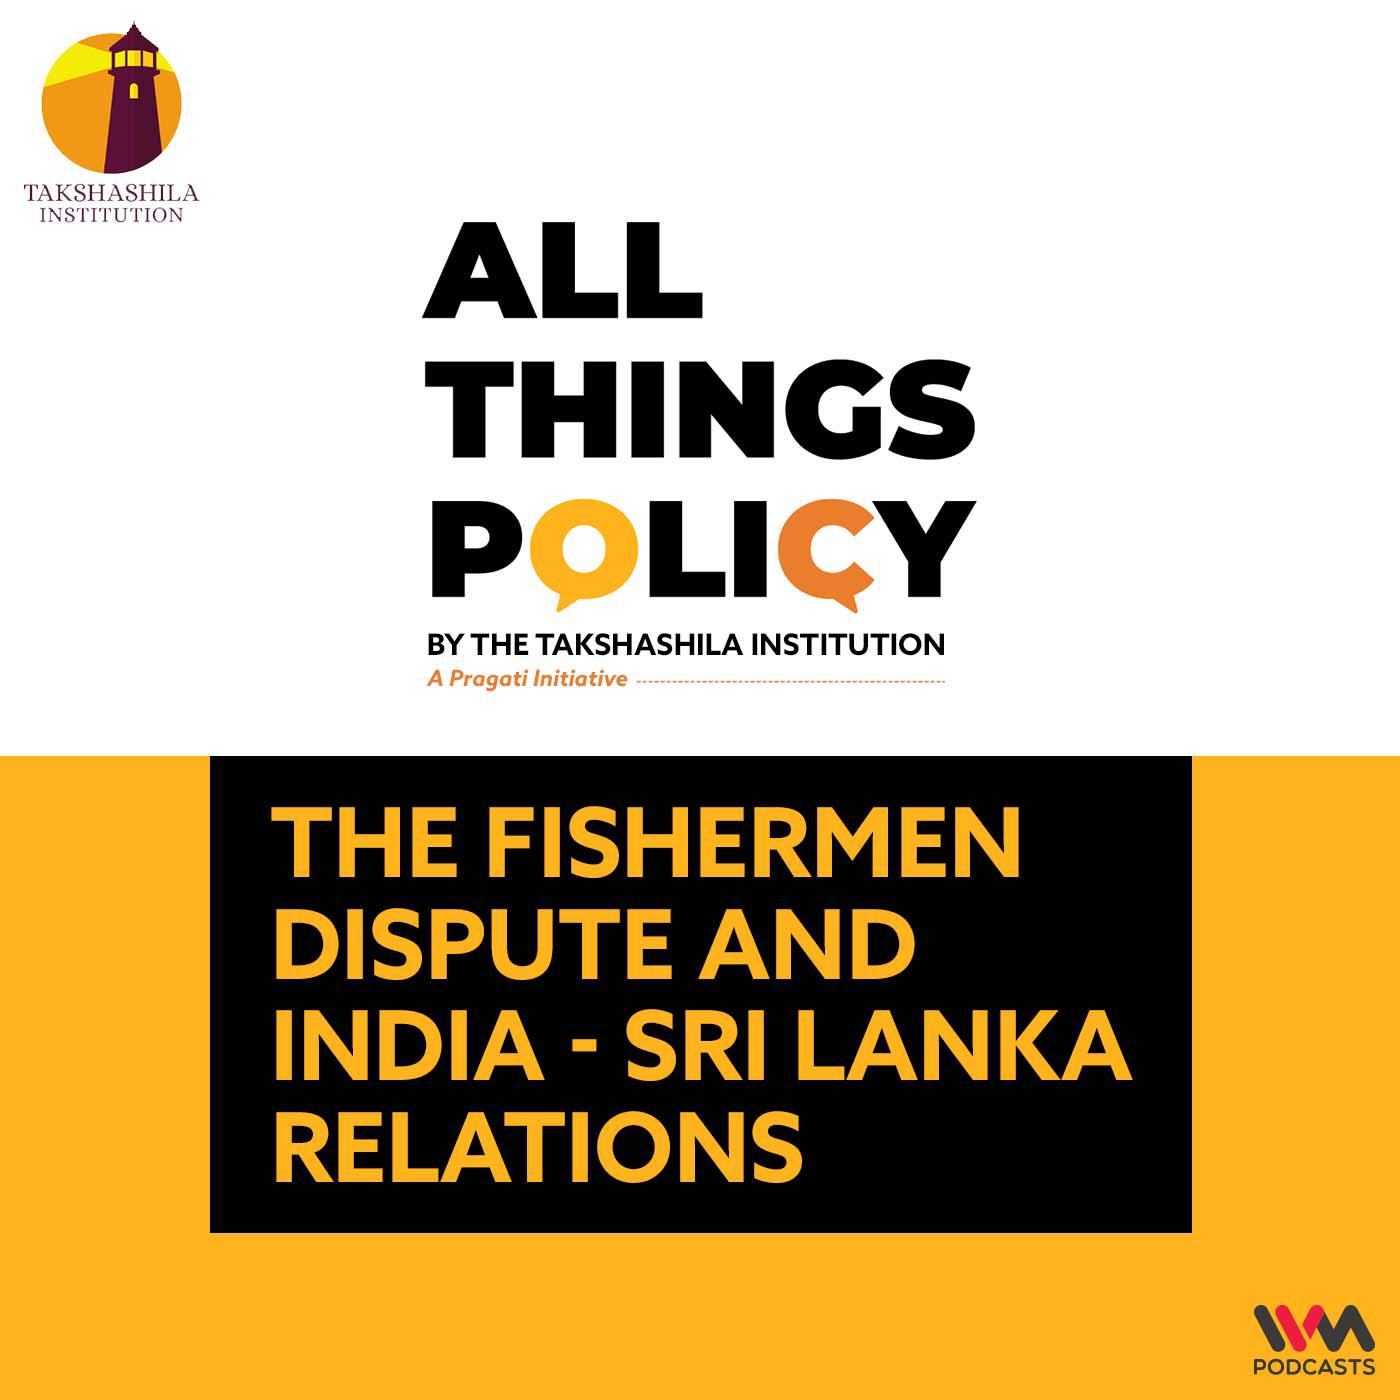 The Fishermen Dispute and India - Sri Lanka Relations